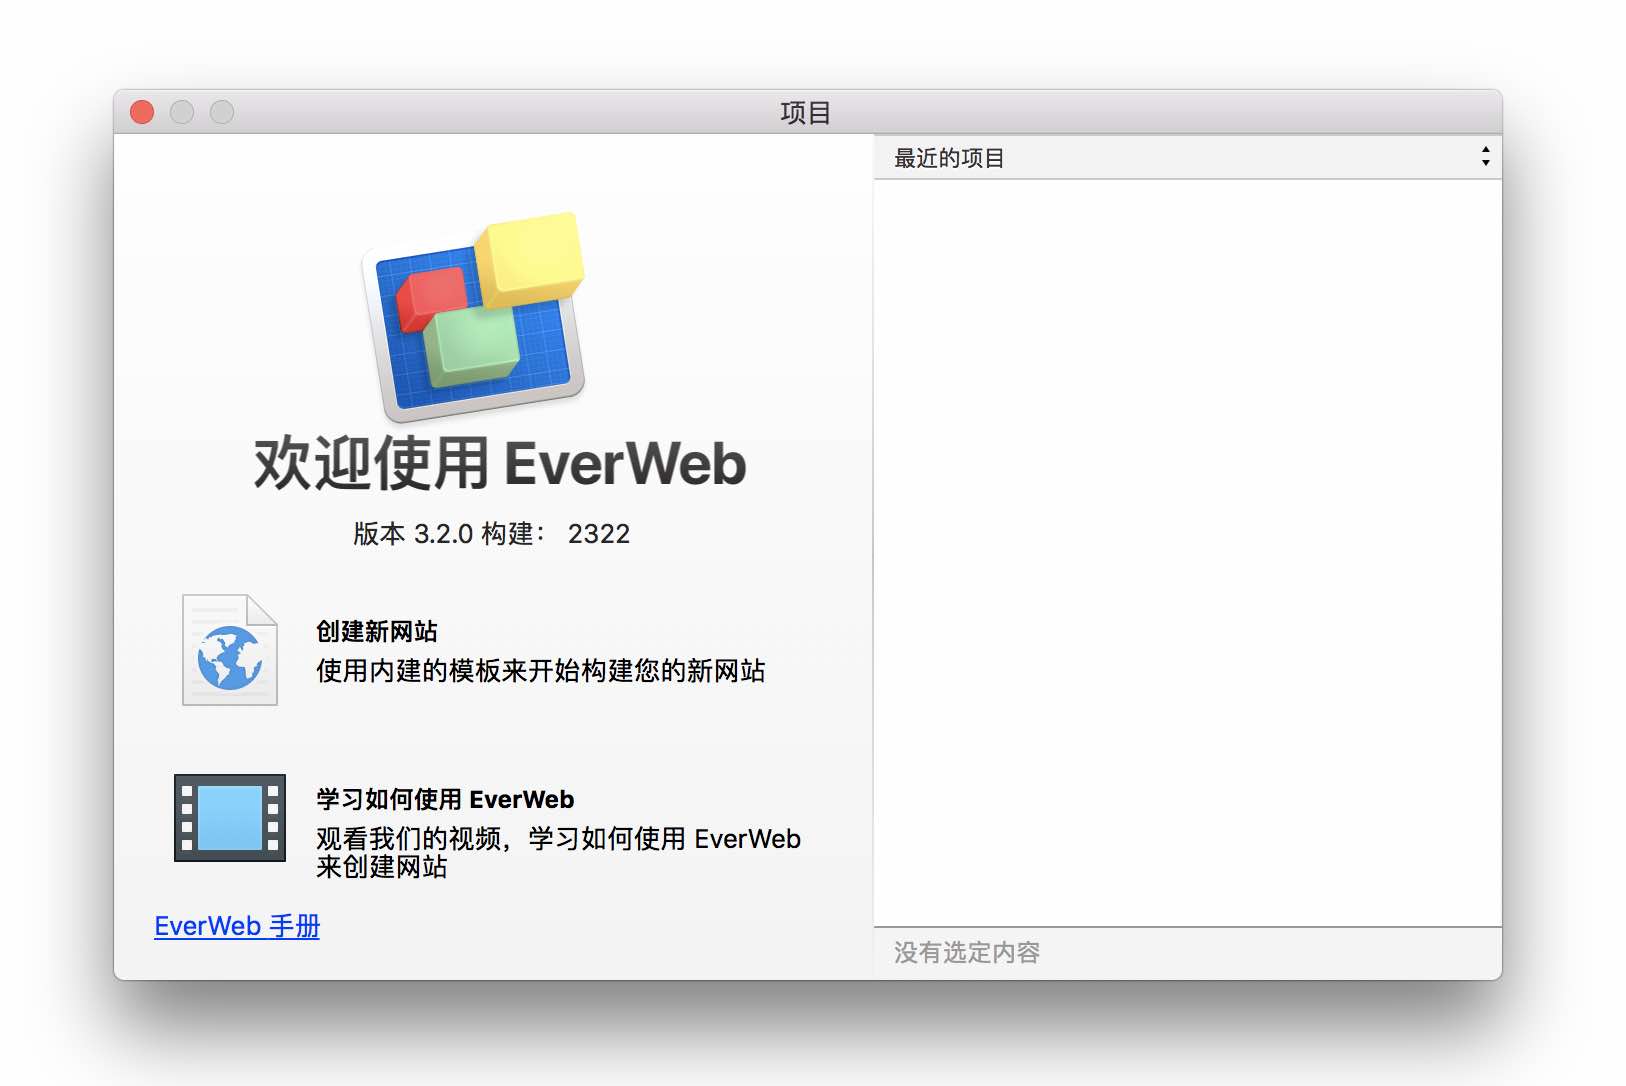 everweb software